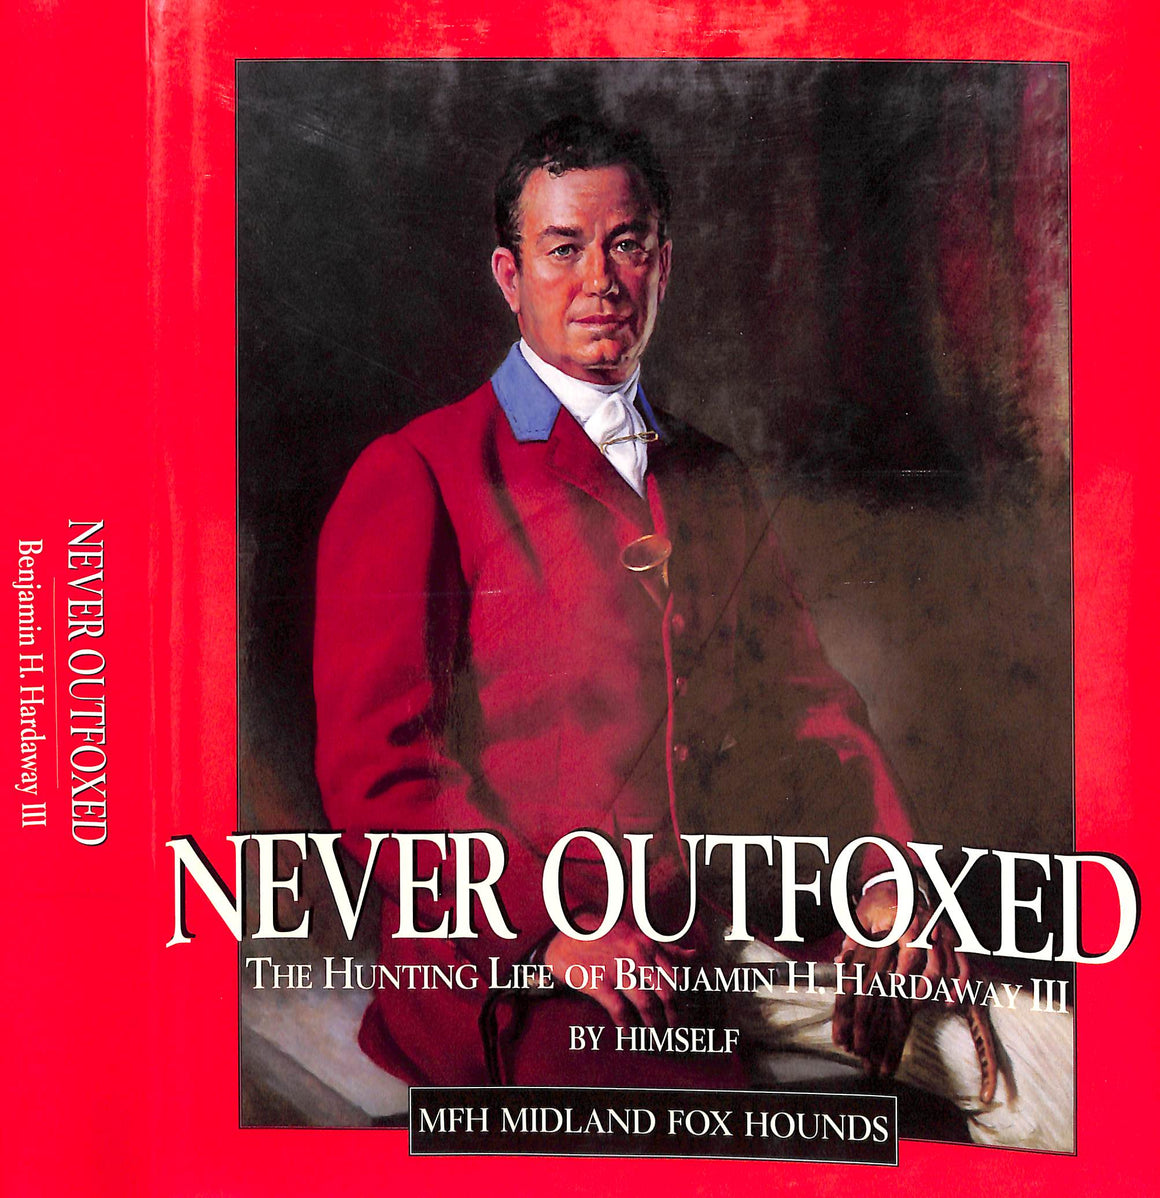 "Never Outfoxed: The Hunting Life Of Benjamin H. Hardaway III" 1997 HARDAWAY, Benjamin H. III [MFH Midland Fox Hounds]